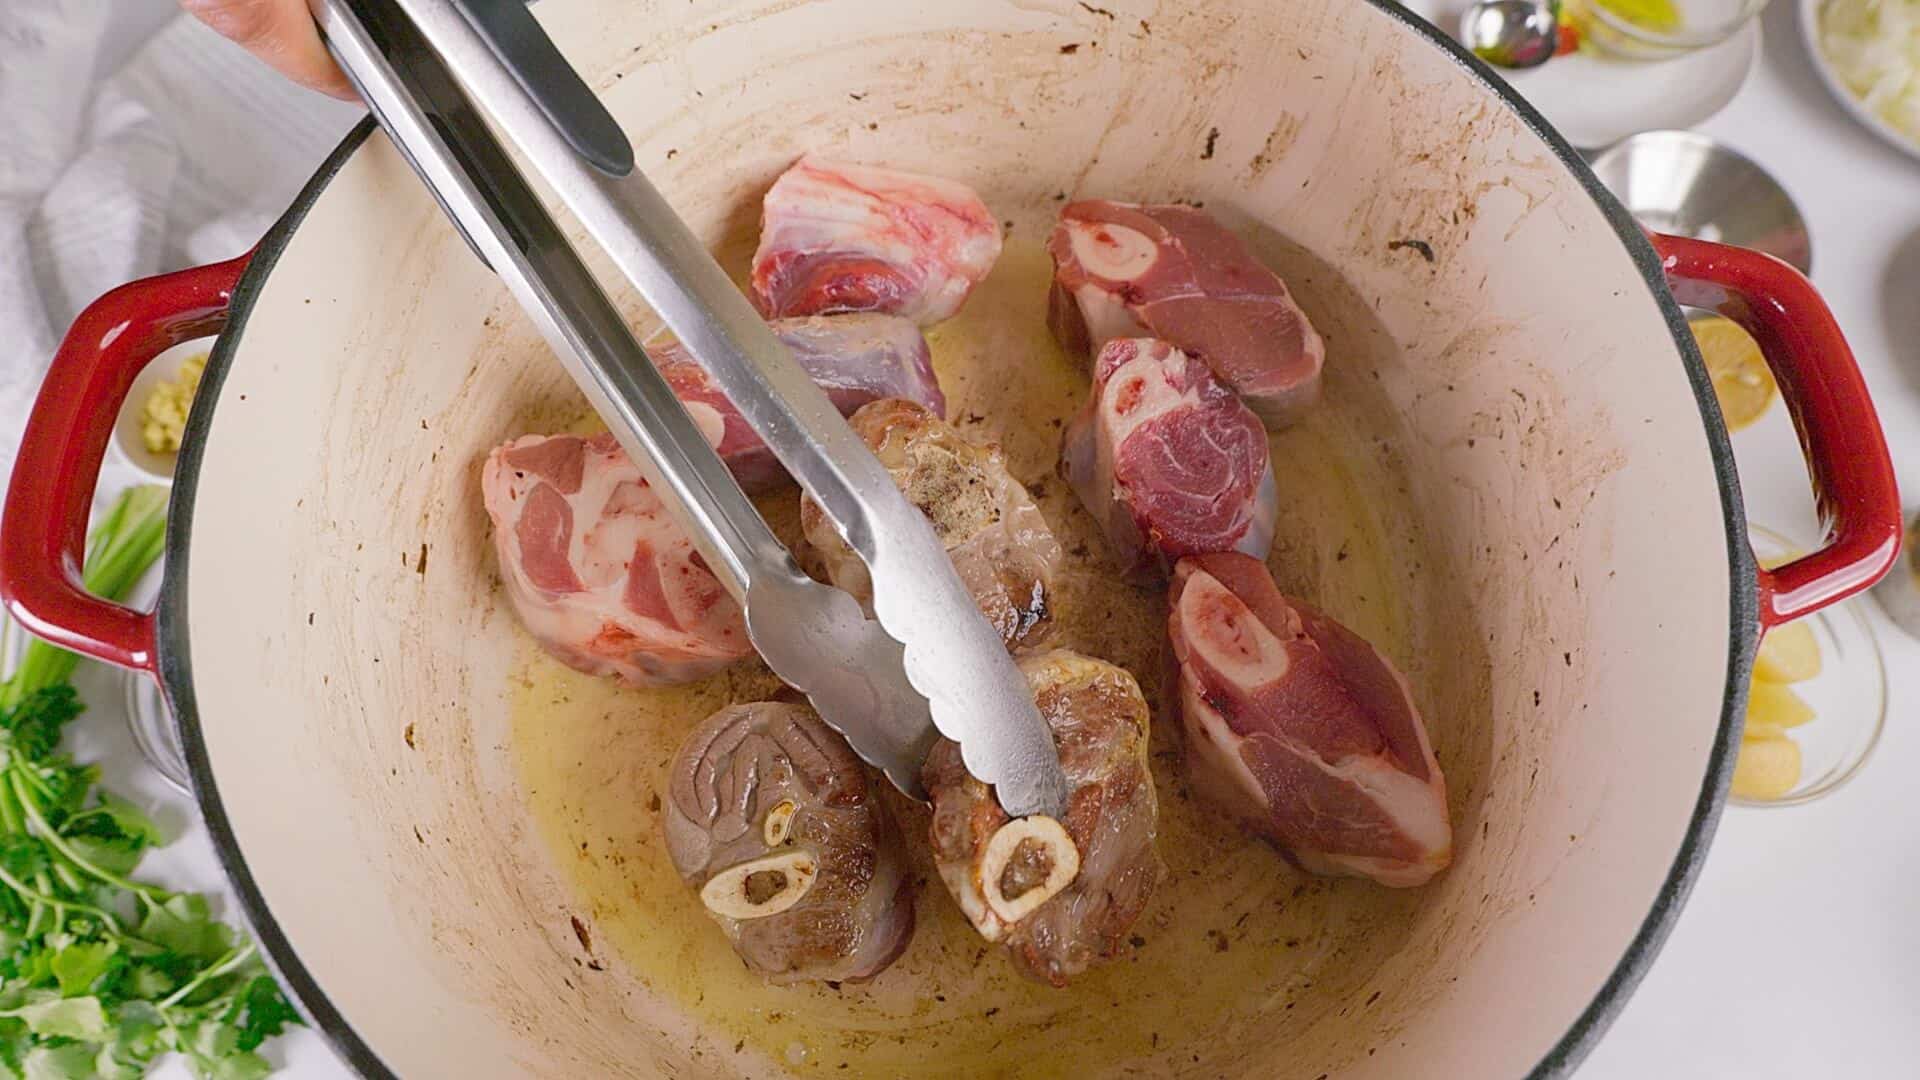 Searing lamb meat.